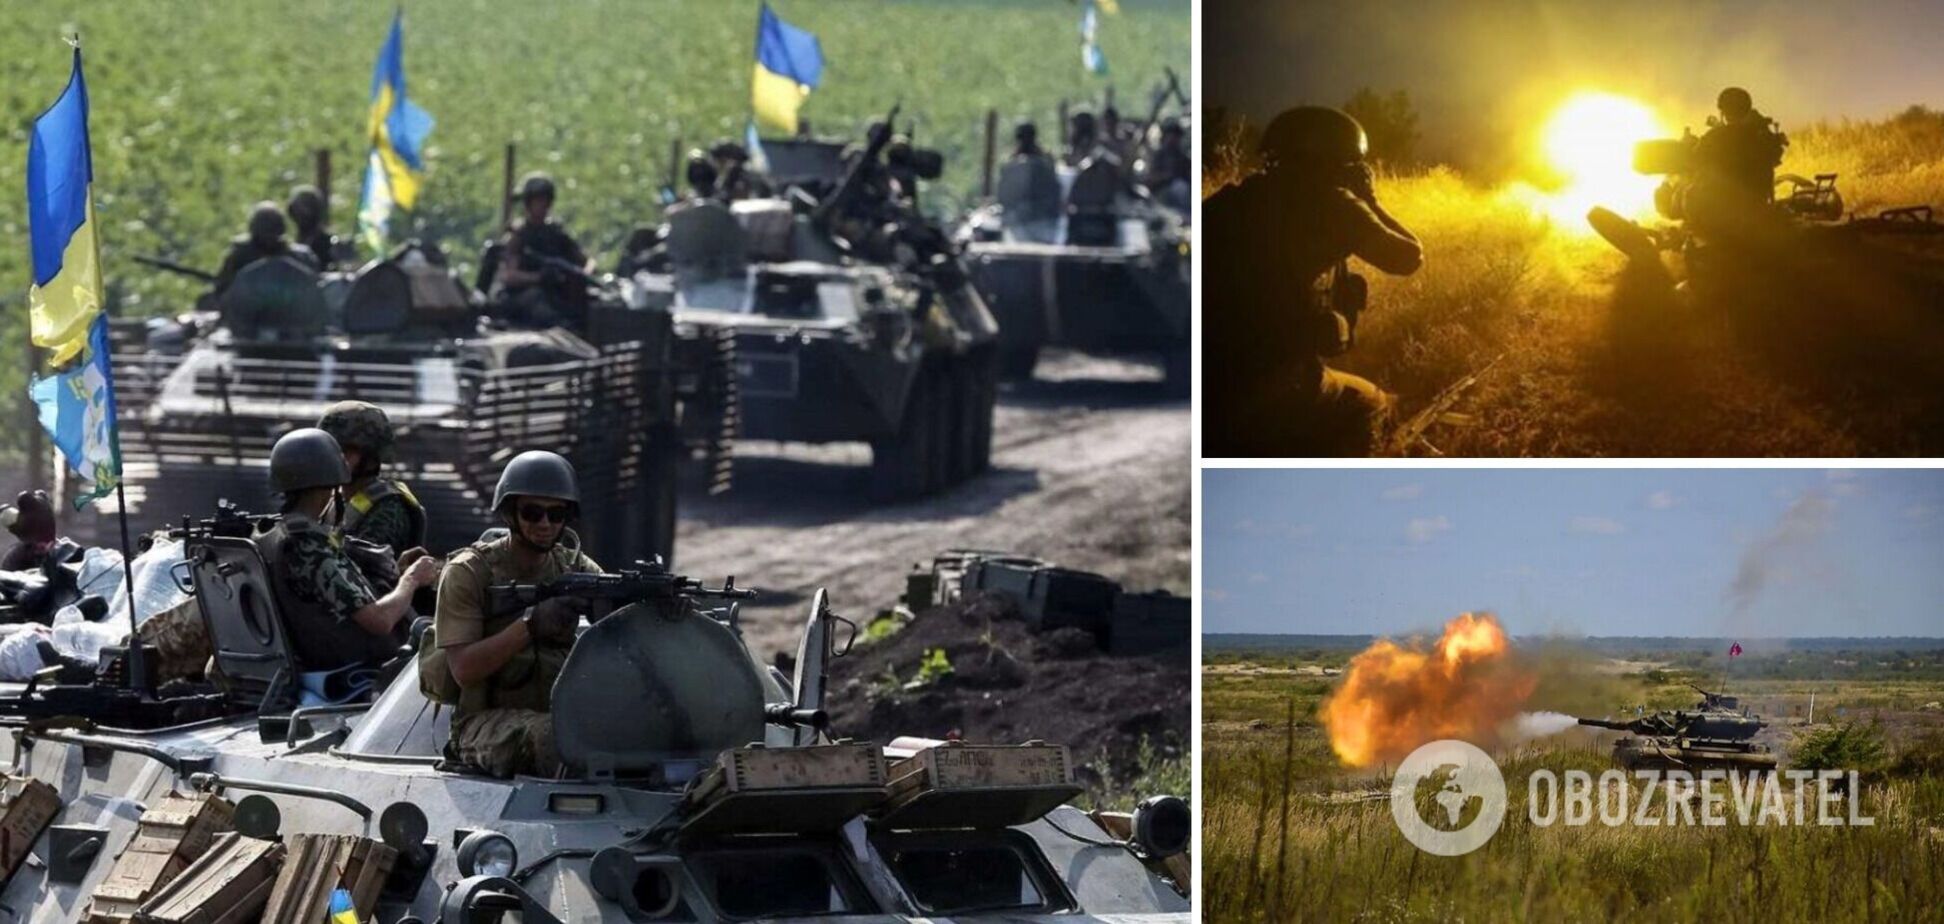 Ми вперлися в Байдена: головний союзник боїться перемоги України. Як до нього достукатися?